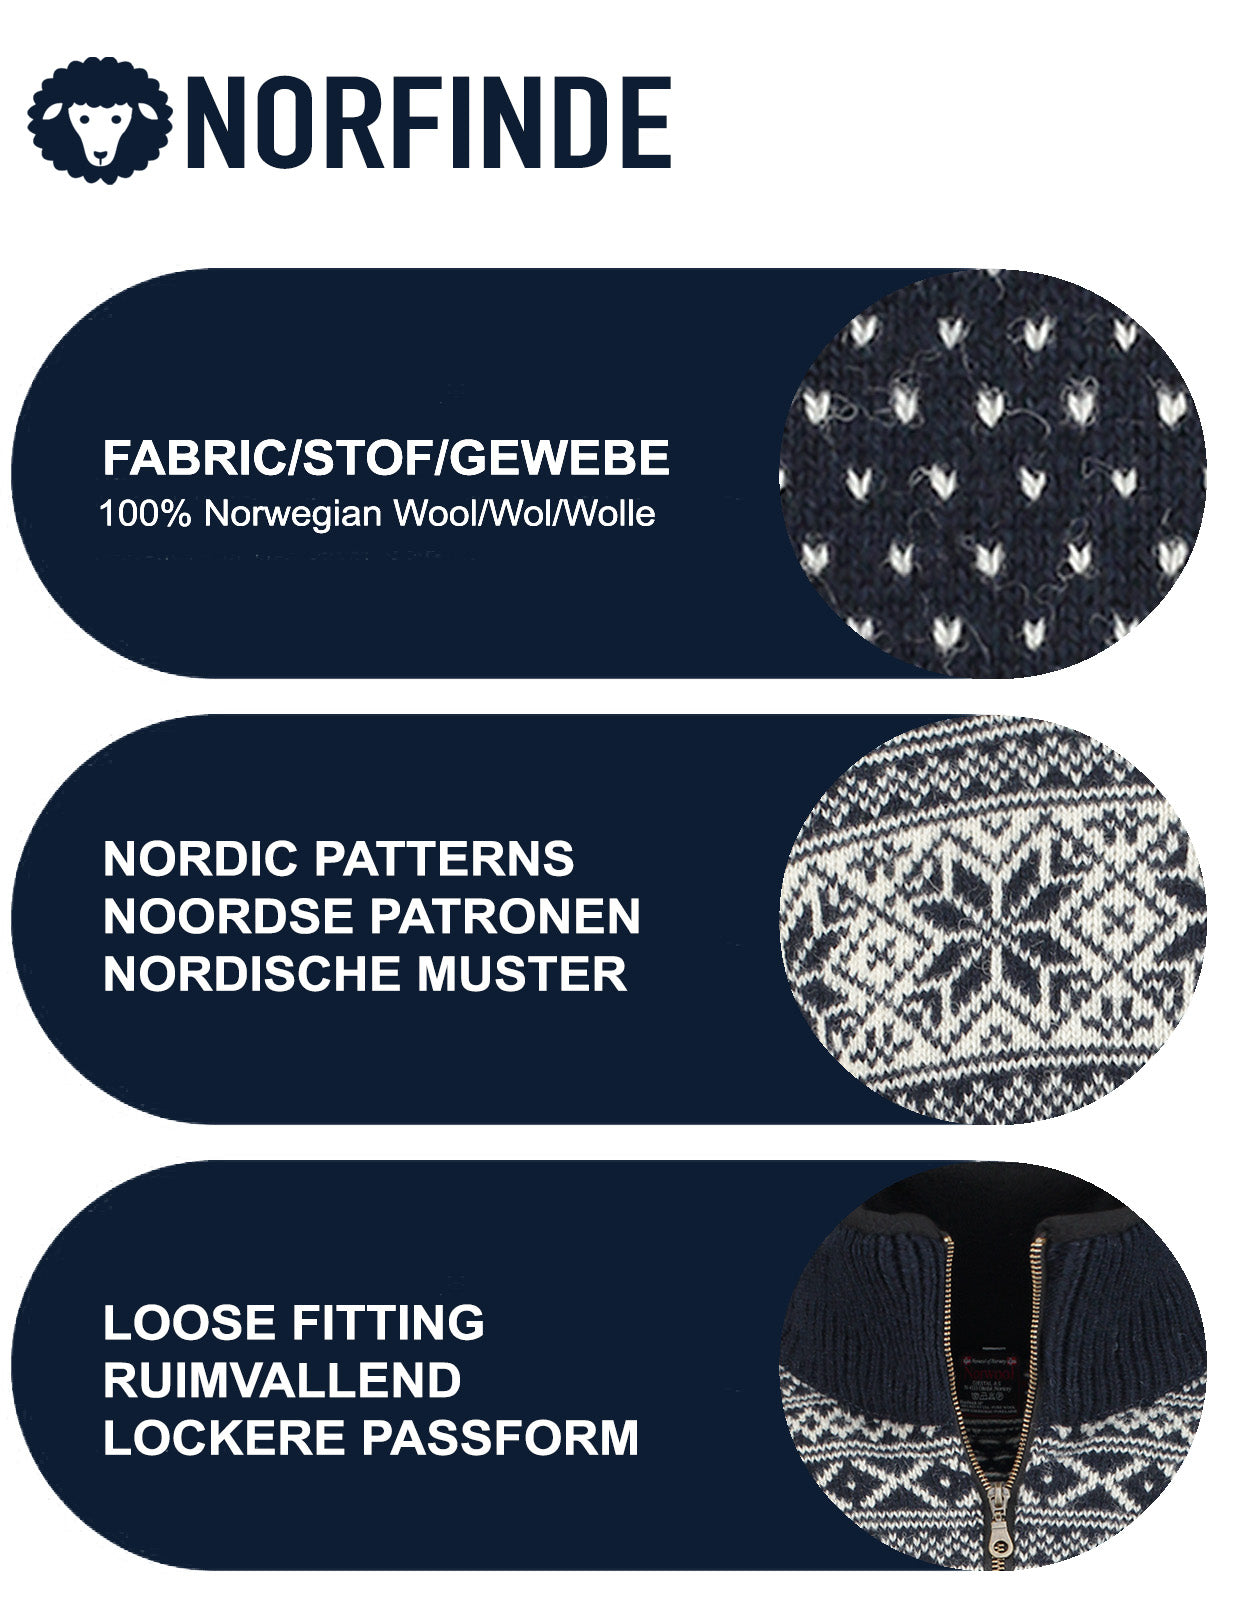 Cardigan made of 100% pure new Norwegian wool, darkblue